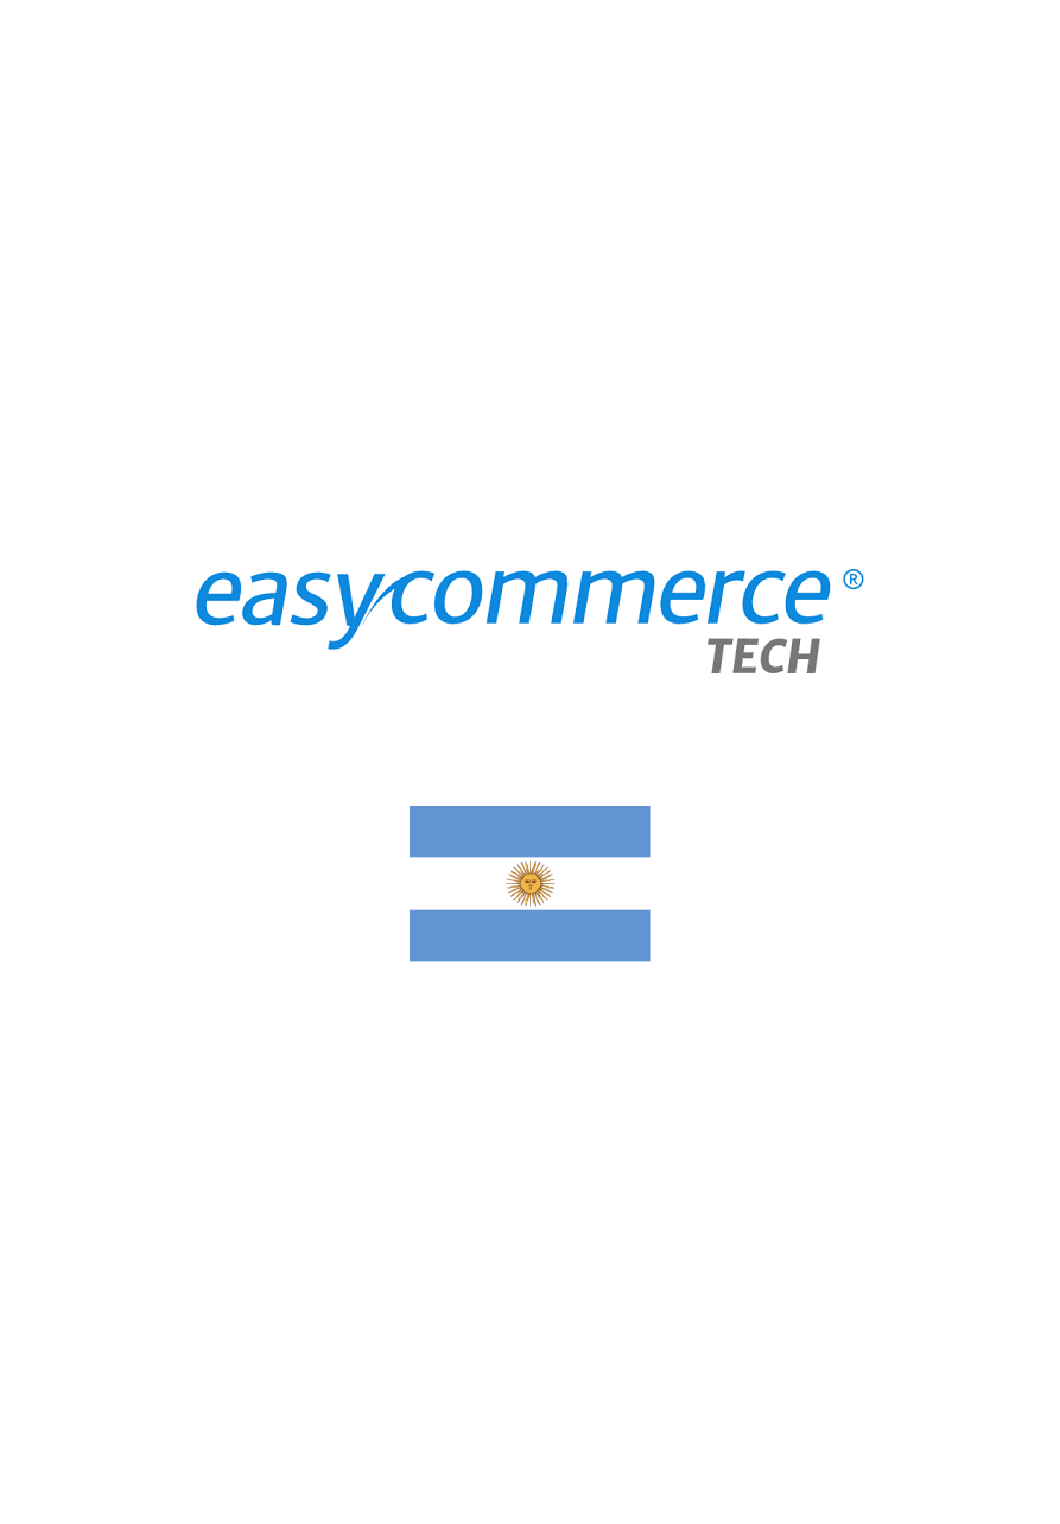 Easycommerce